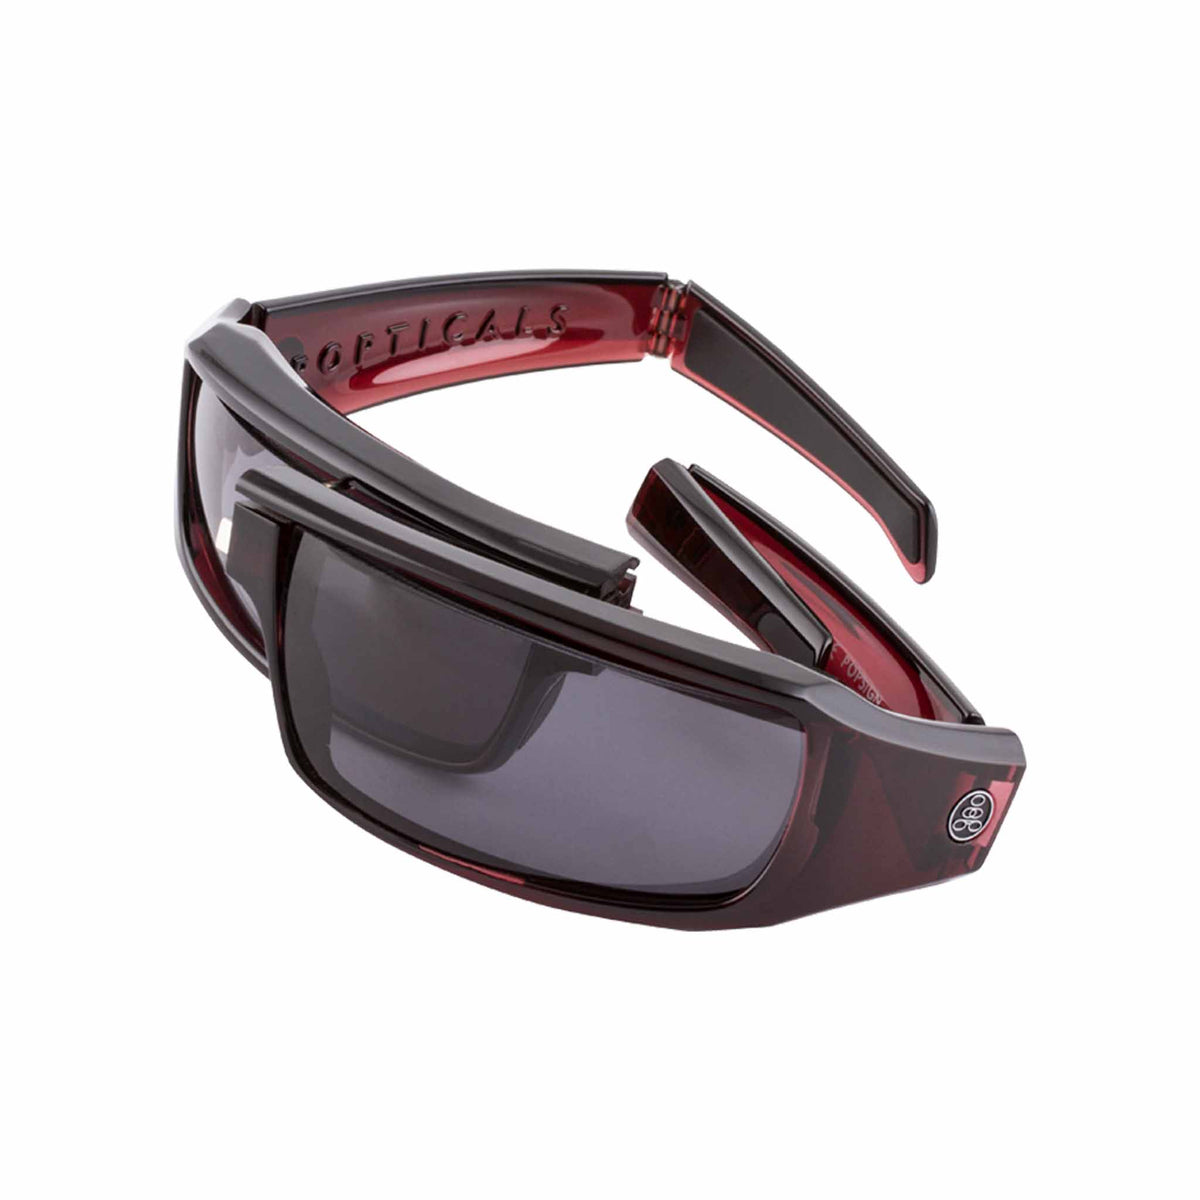 Popticals, Premium Compact Sunglasses, PopSign, 030020-LFGP, Polarized Sunglasses, Gloss Wine/Black Crystal Frame, Gray Lenses, Spider View